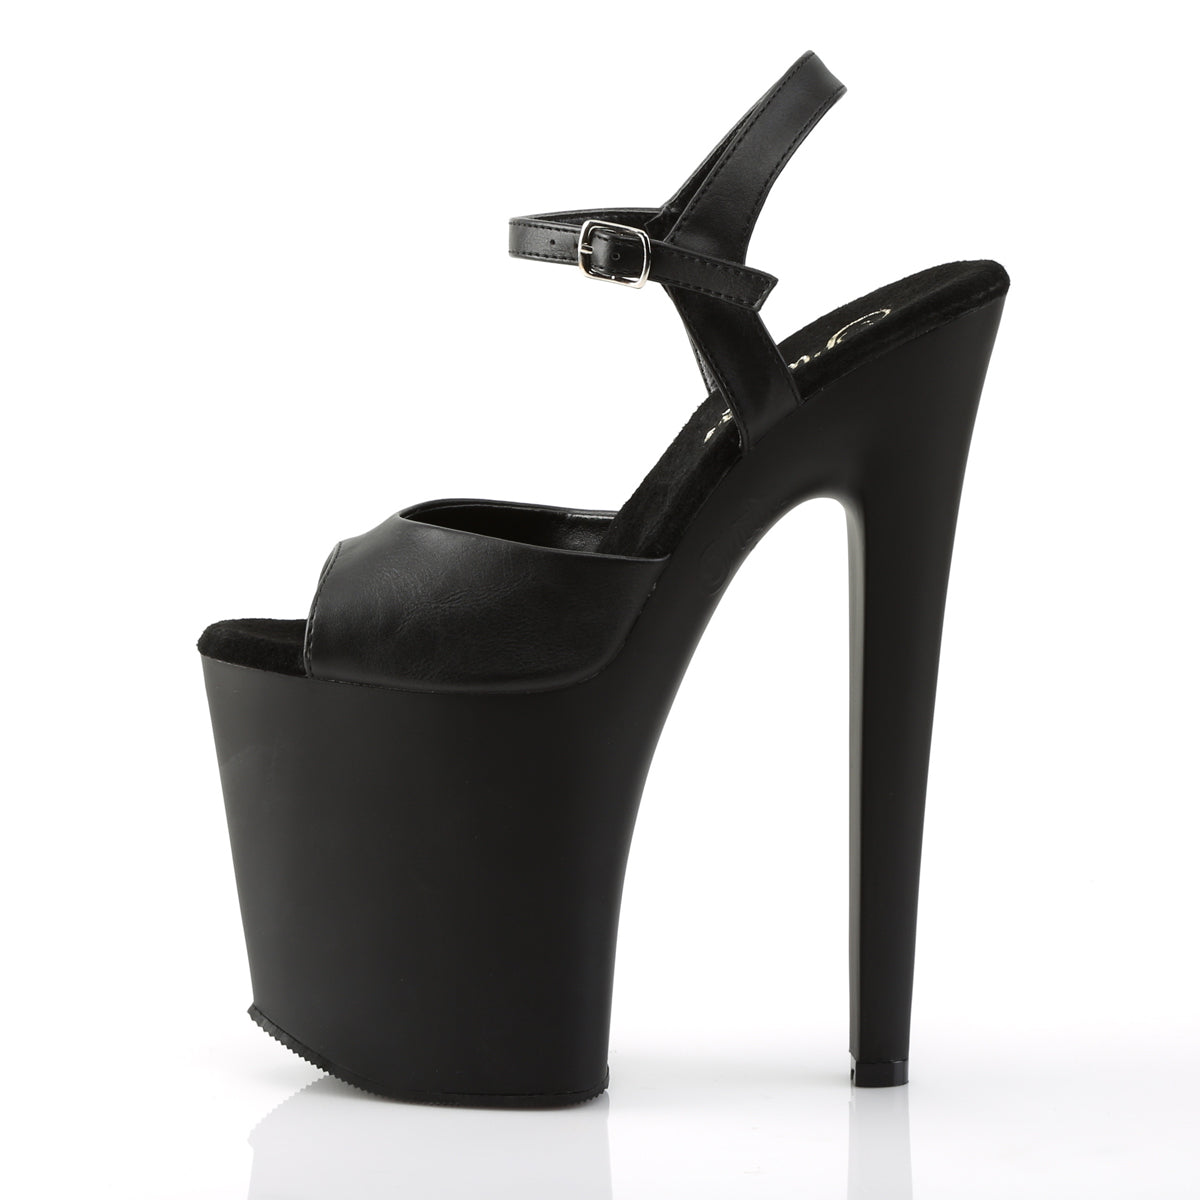 XTREME-809 Pleaser 8" Heel Black Pole Dancing Platform Shoes-Pleaser- Sexy Shoes Pole Dance Heels